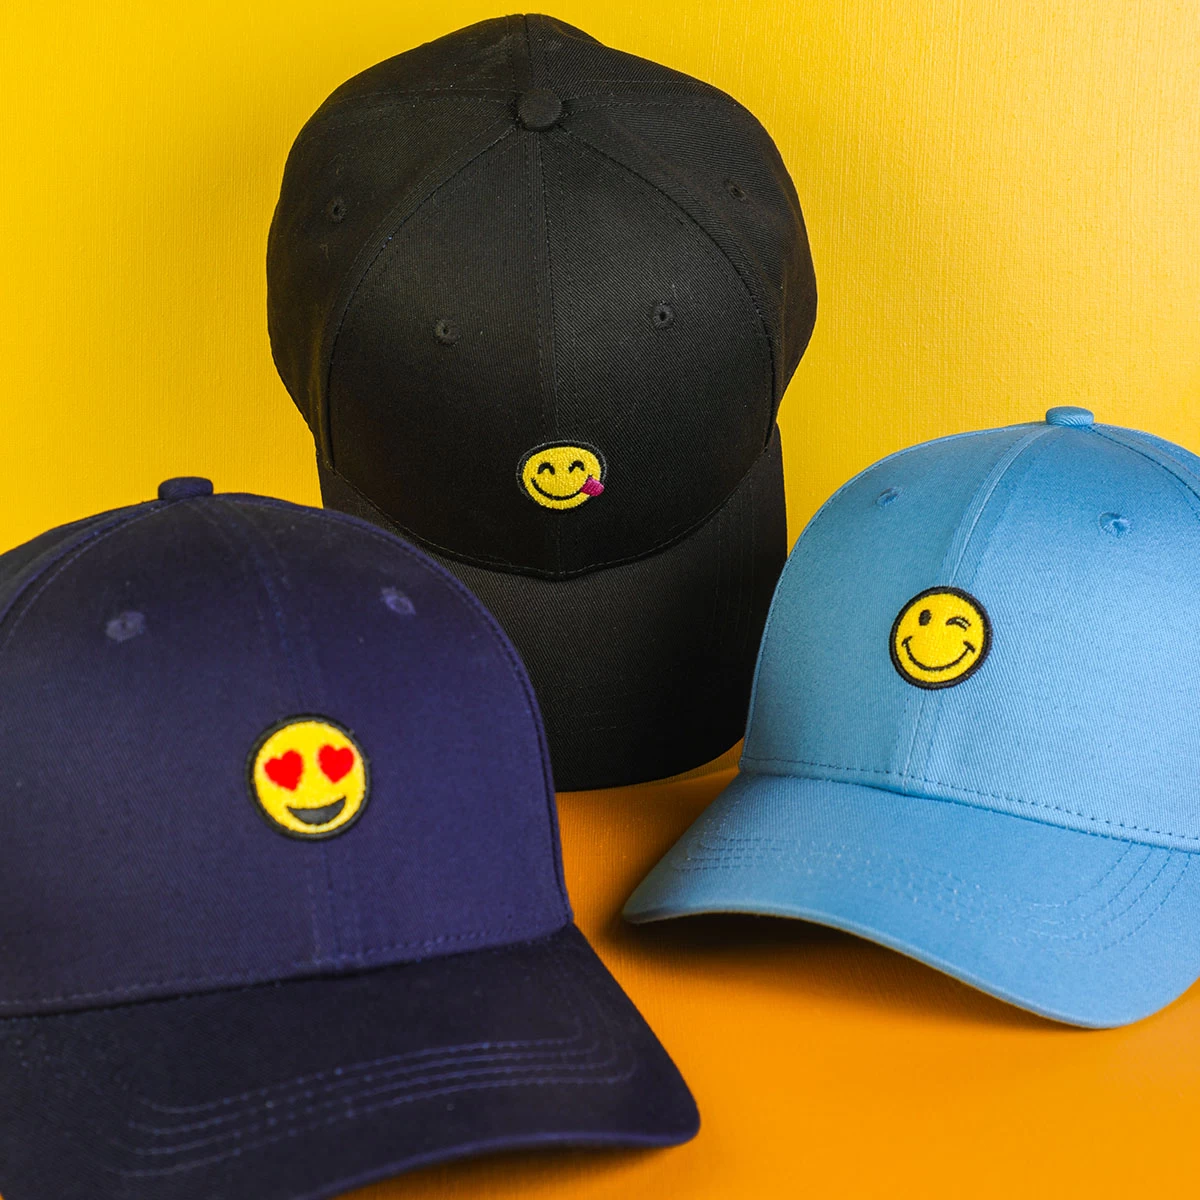 embroidered smiley face emoji logo sports cotton baseball hats